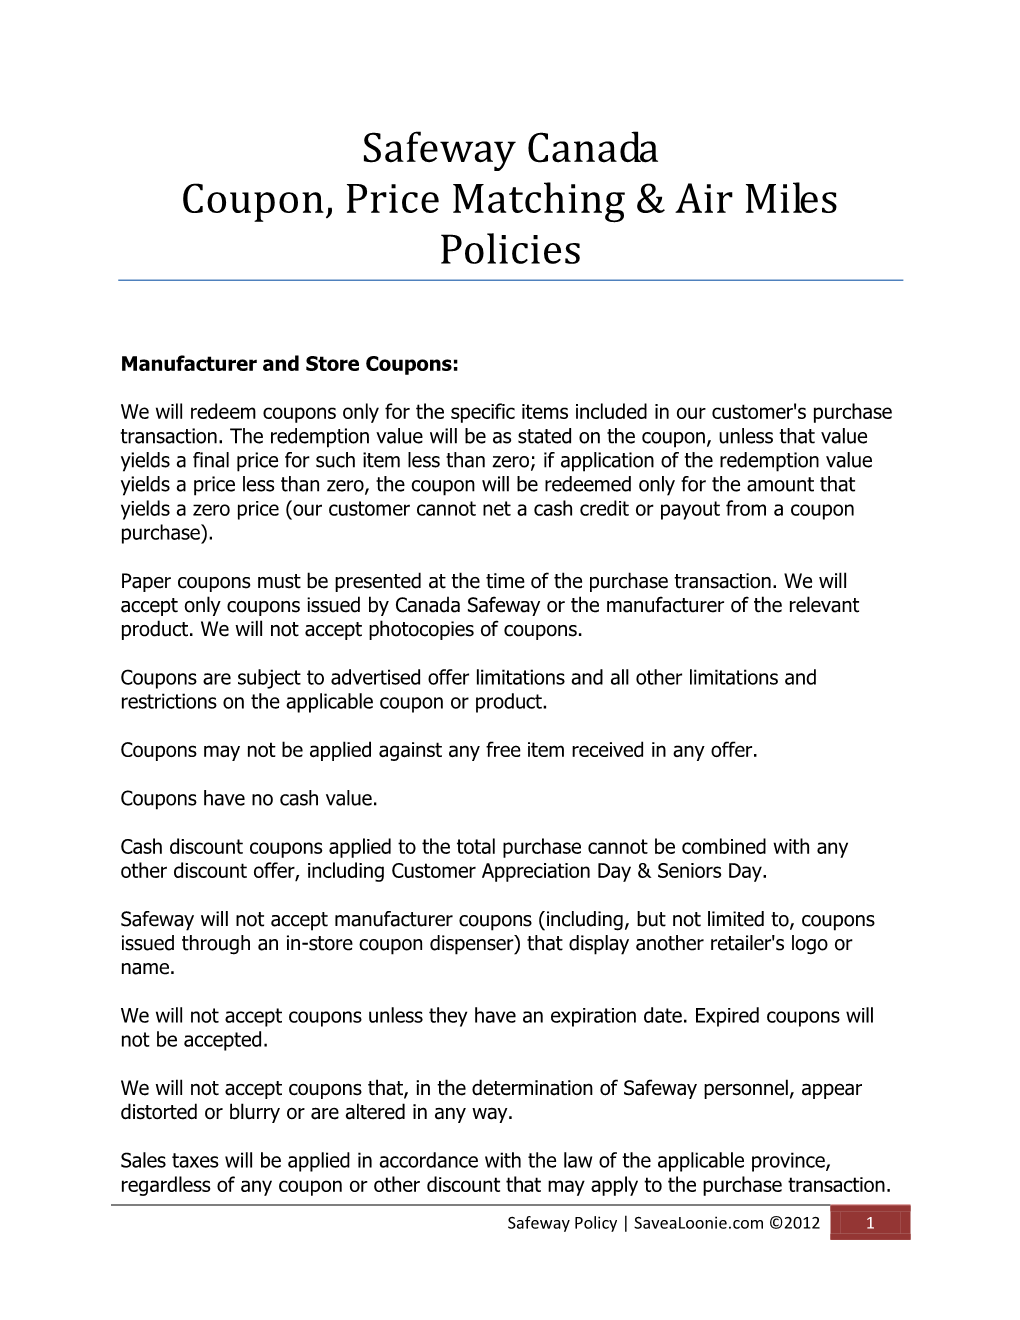 Safeway Canada Coupon, Price Matching & Air Miles Policies